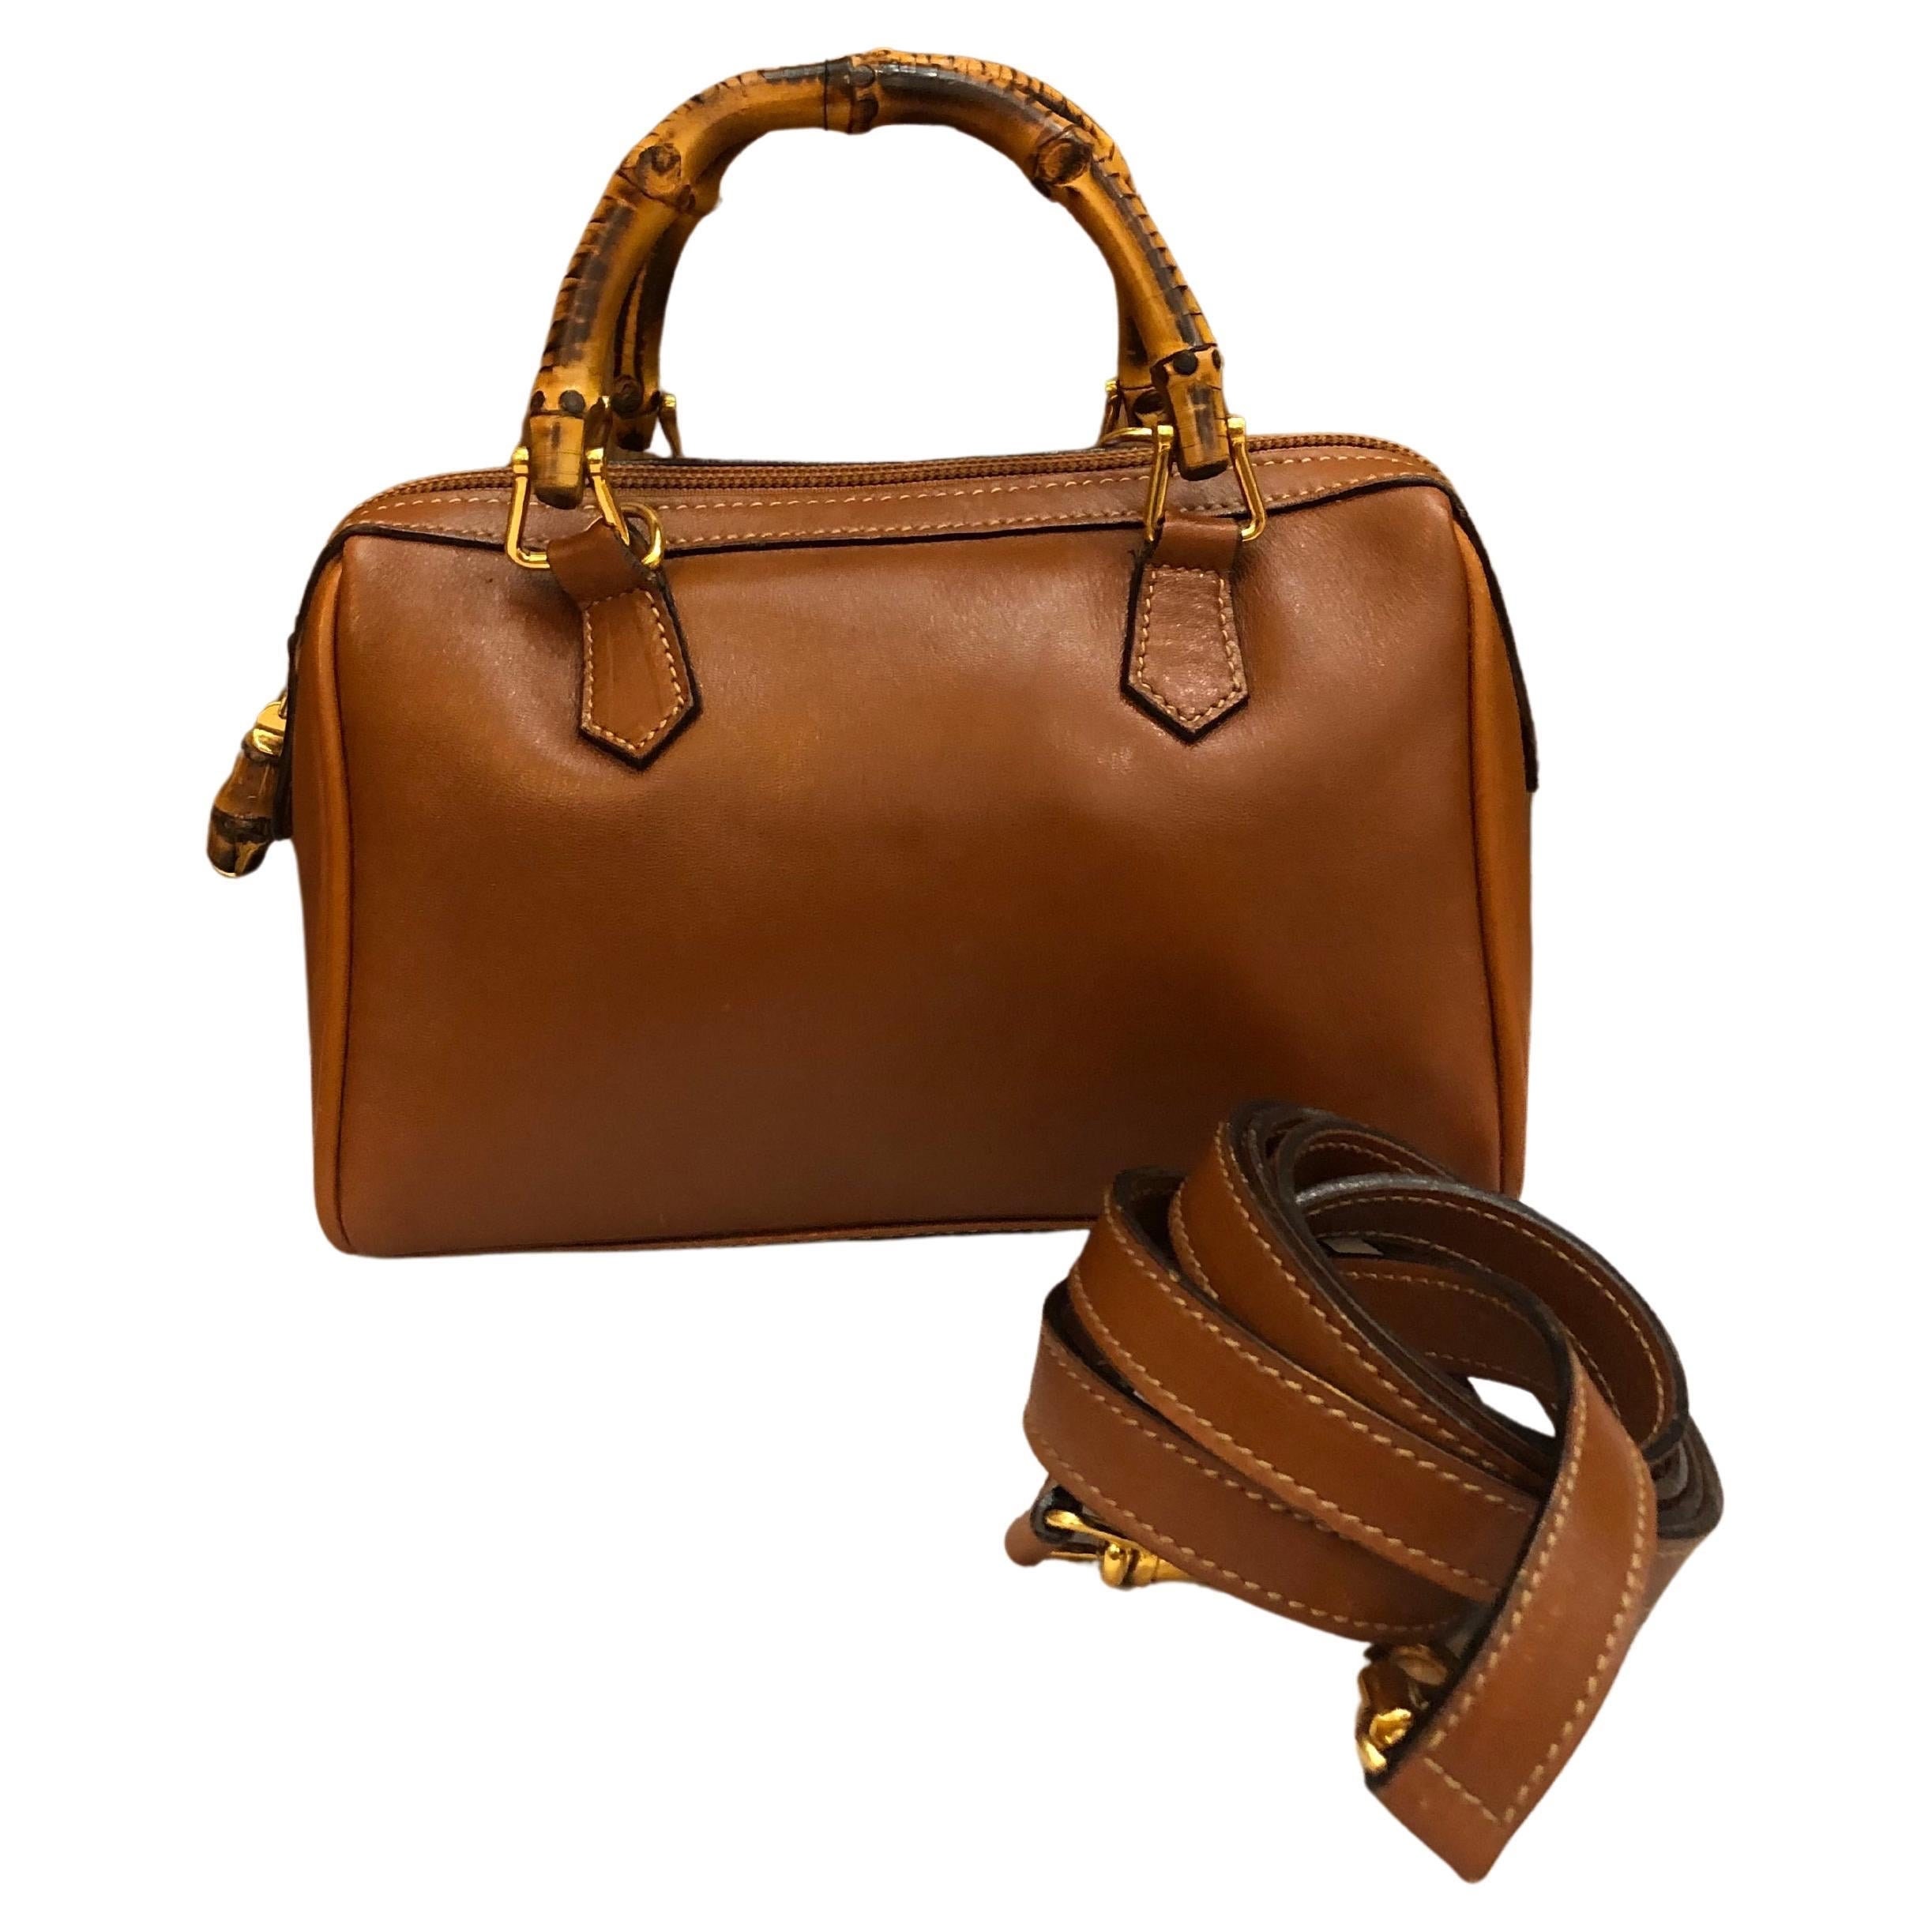 Céline Pre-Owned Mini Boston Bag in Brown